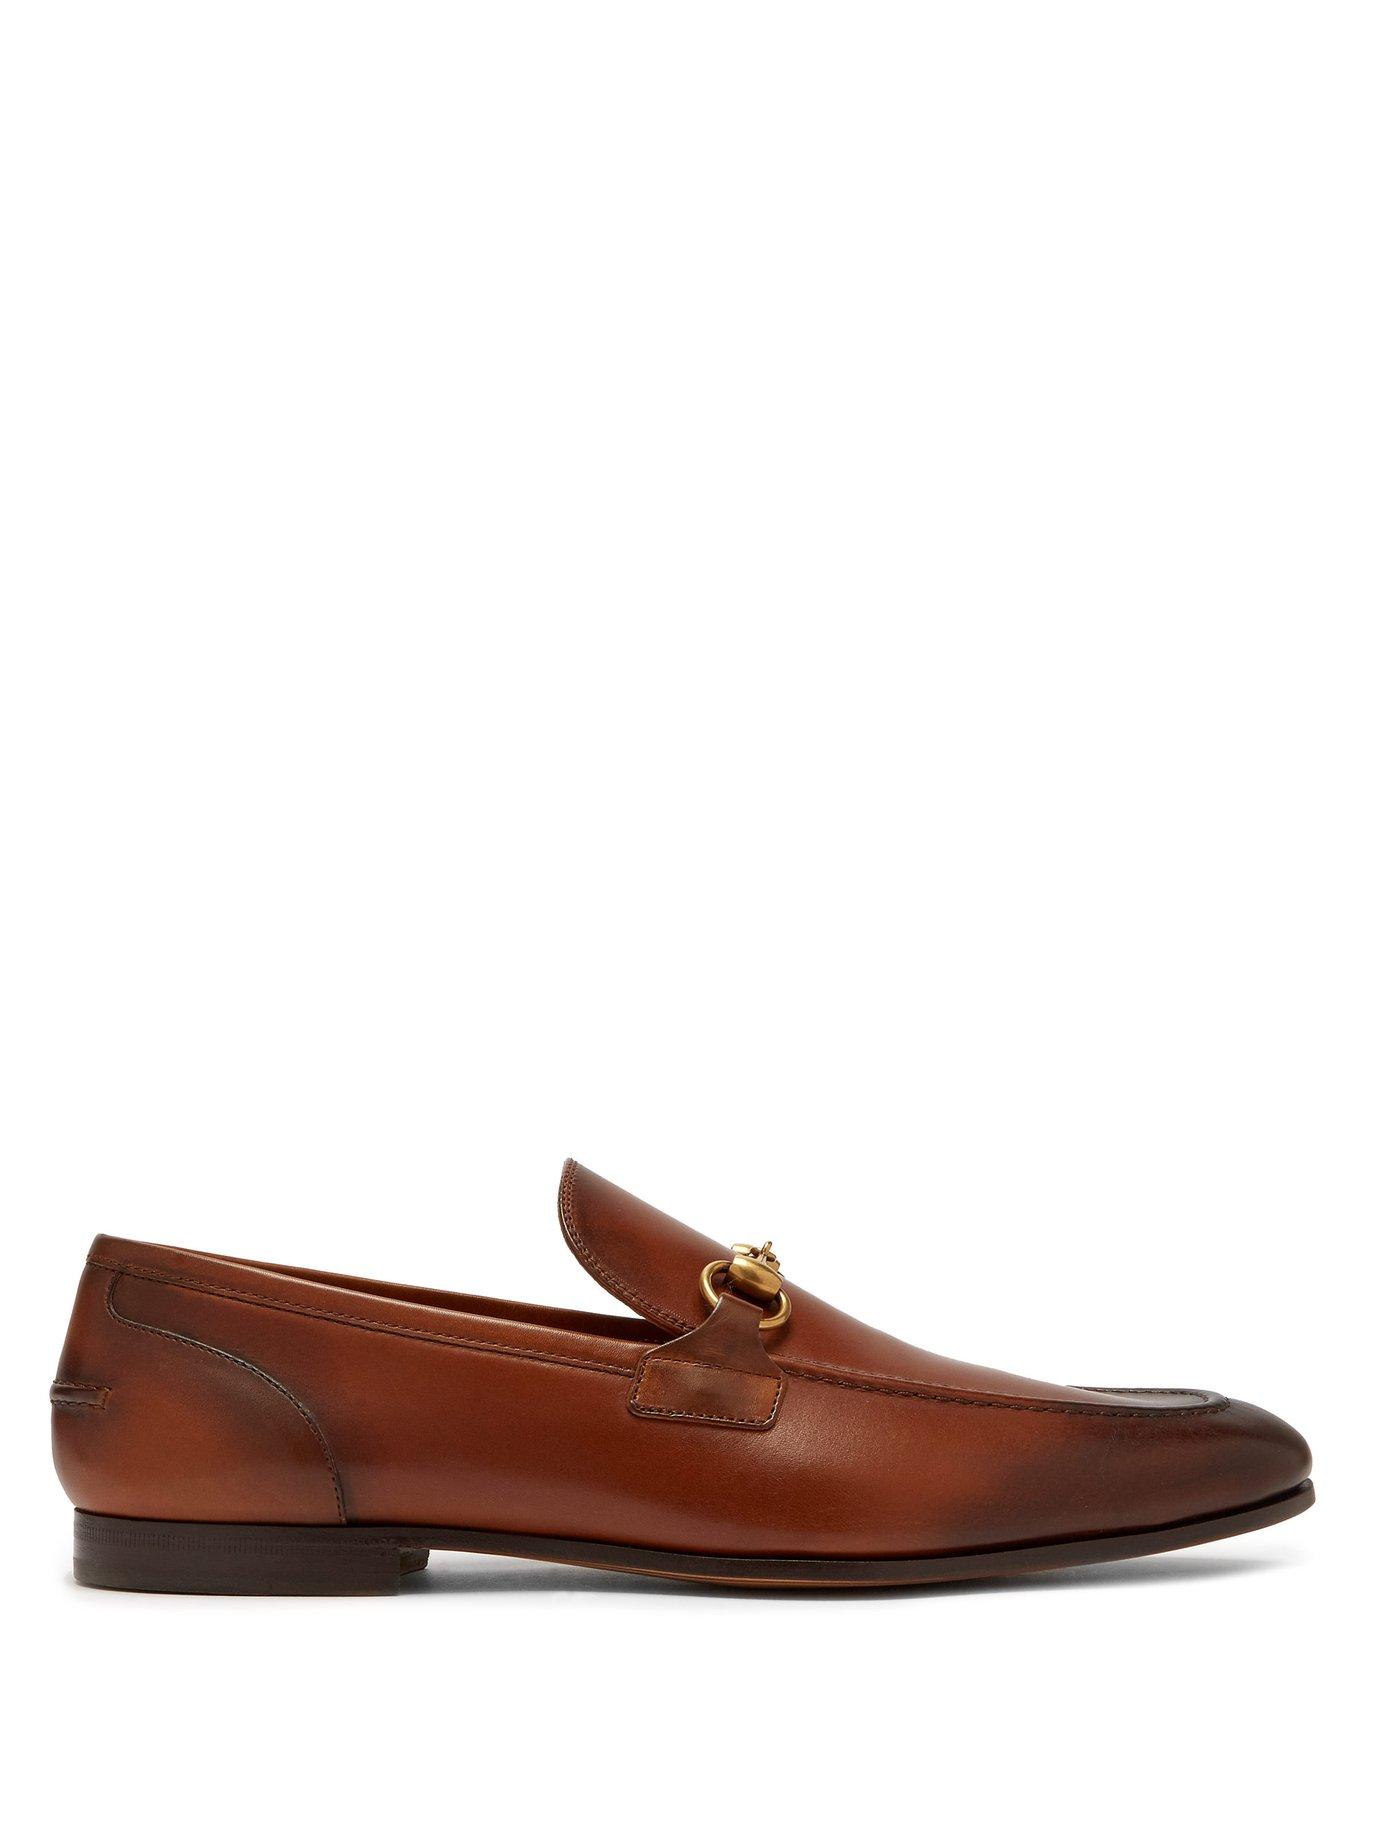 Gucci Jordan Horsebit Leather Loafers in Tan (Brown) for Men - Save 2% ...